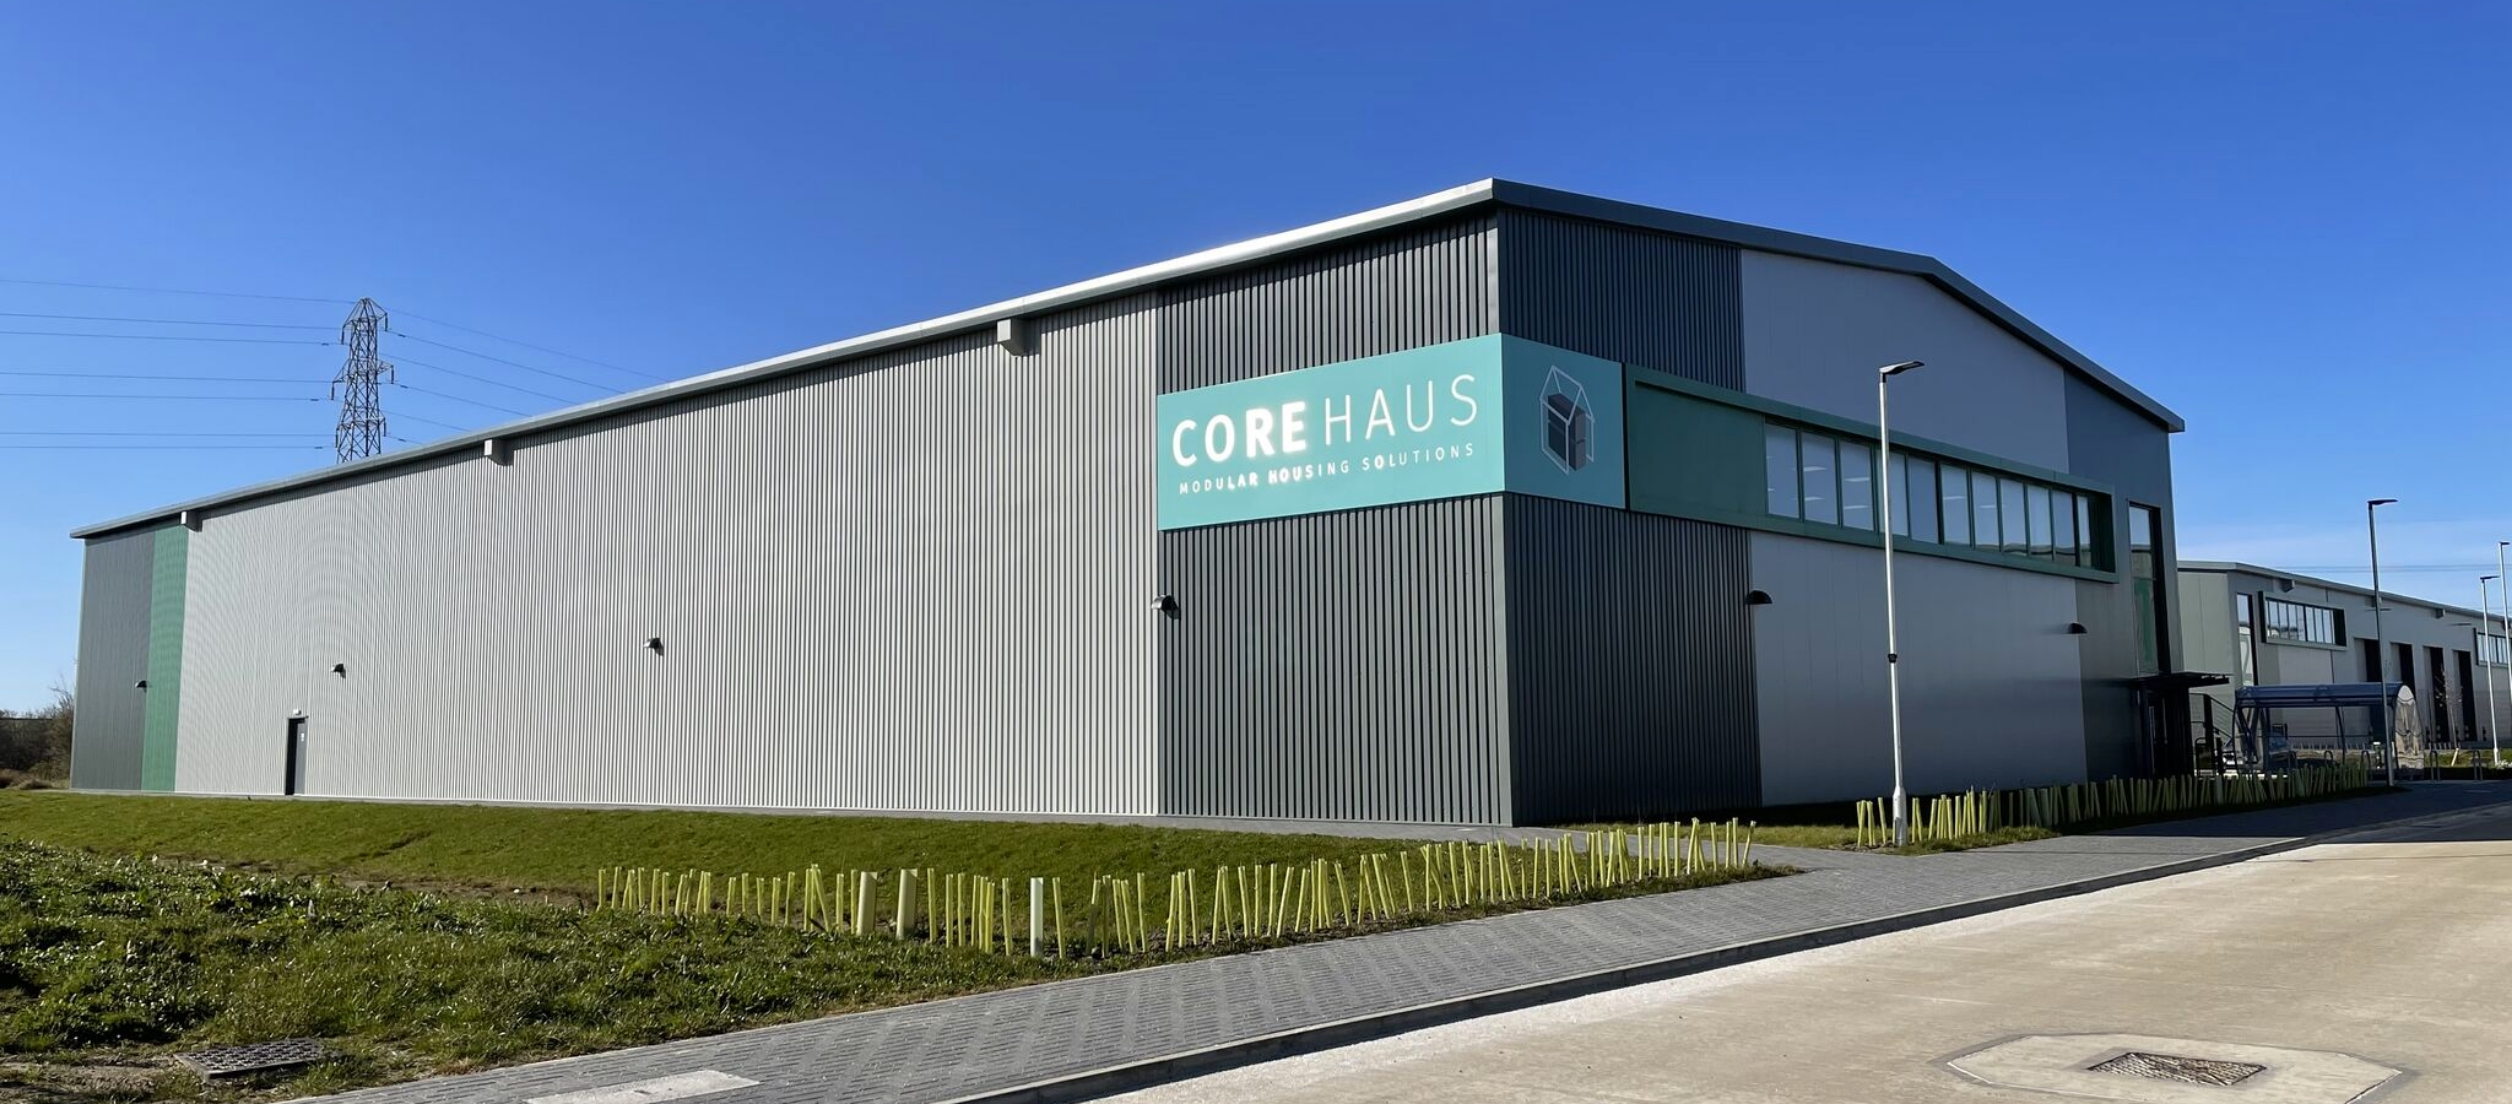 CoreHaus modular home factory in Murton, Seaham